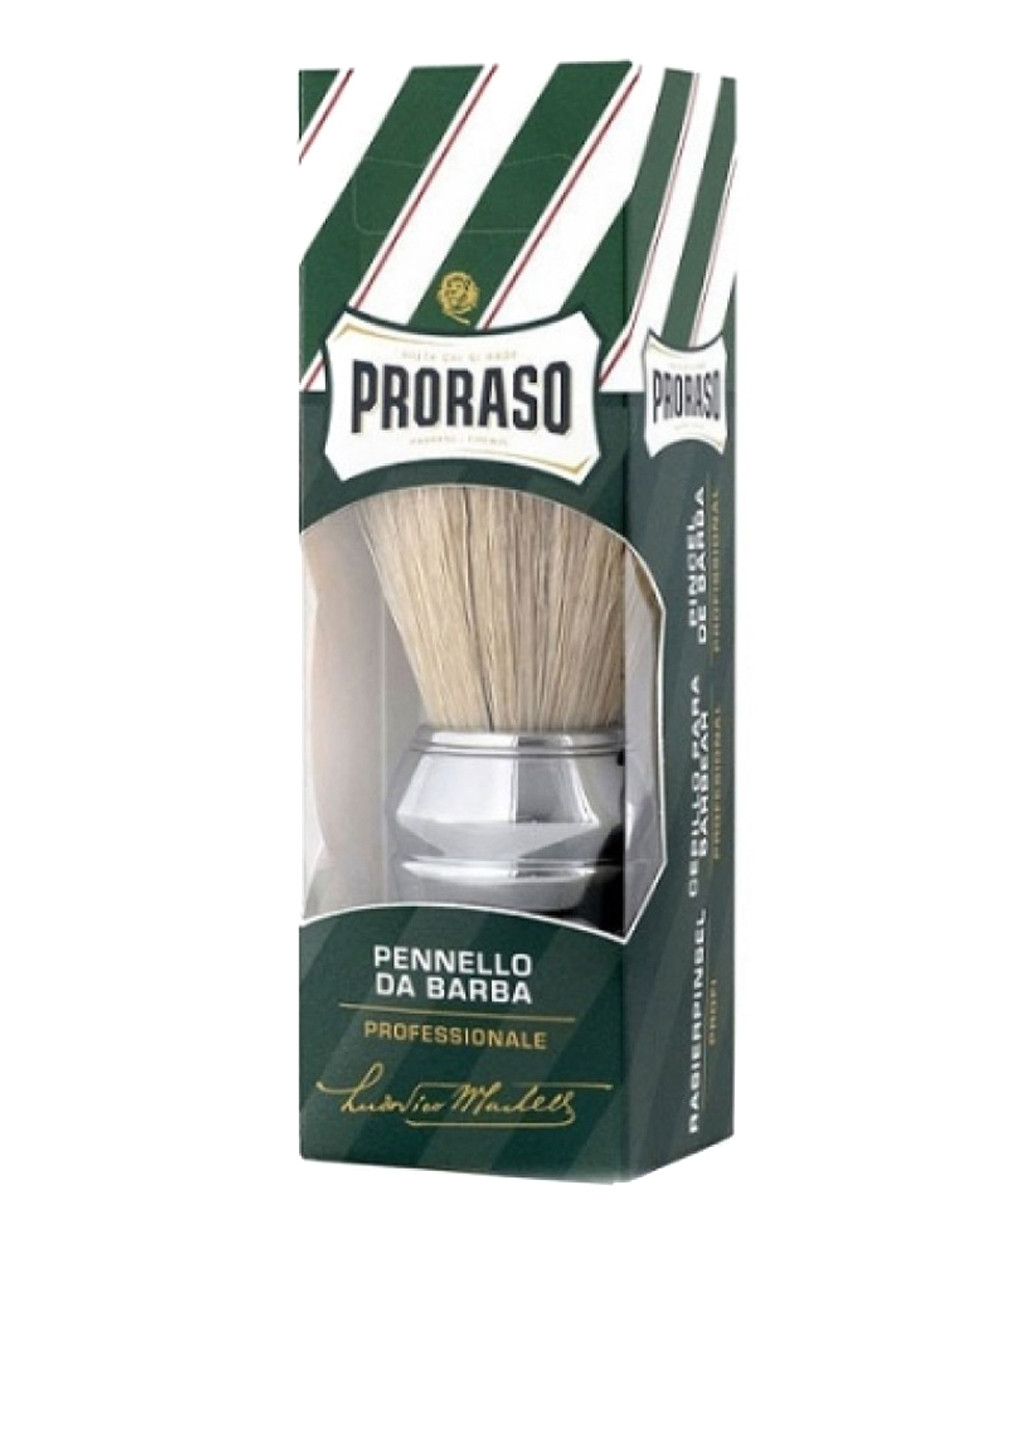 Помазок для бритья Penello De Barba 1 шт. Proraso (88100158)